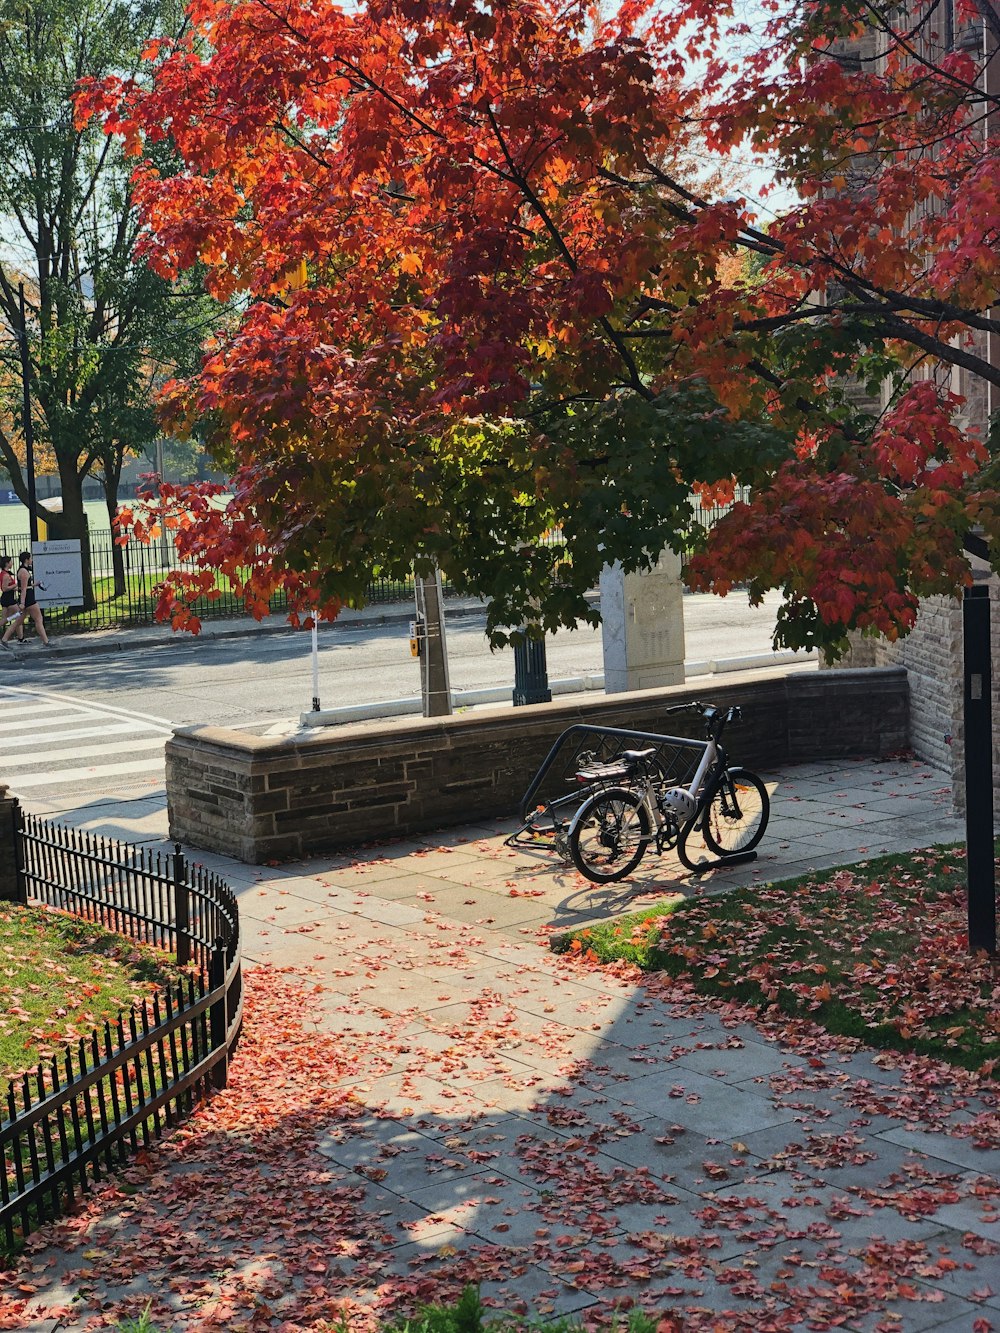 bicicleta preta estacionada no banco de concreto cinza perto de árvores verdes e marrons durante o dia